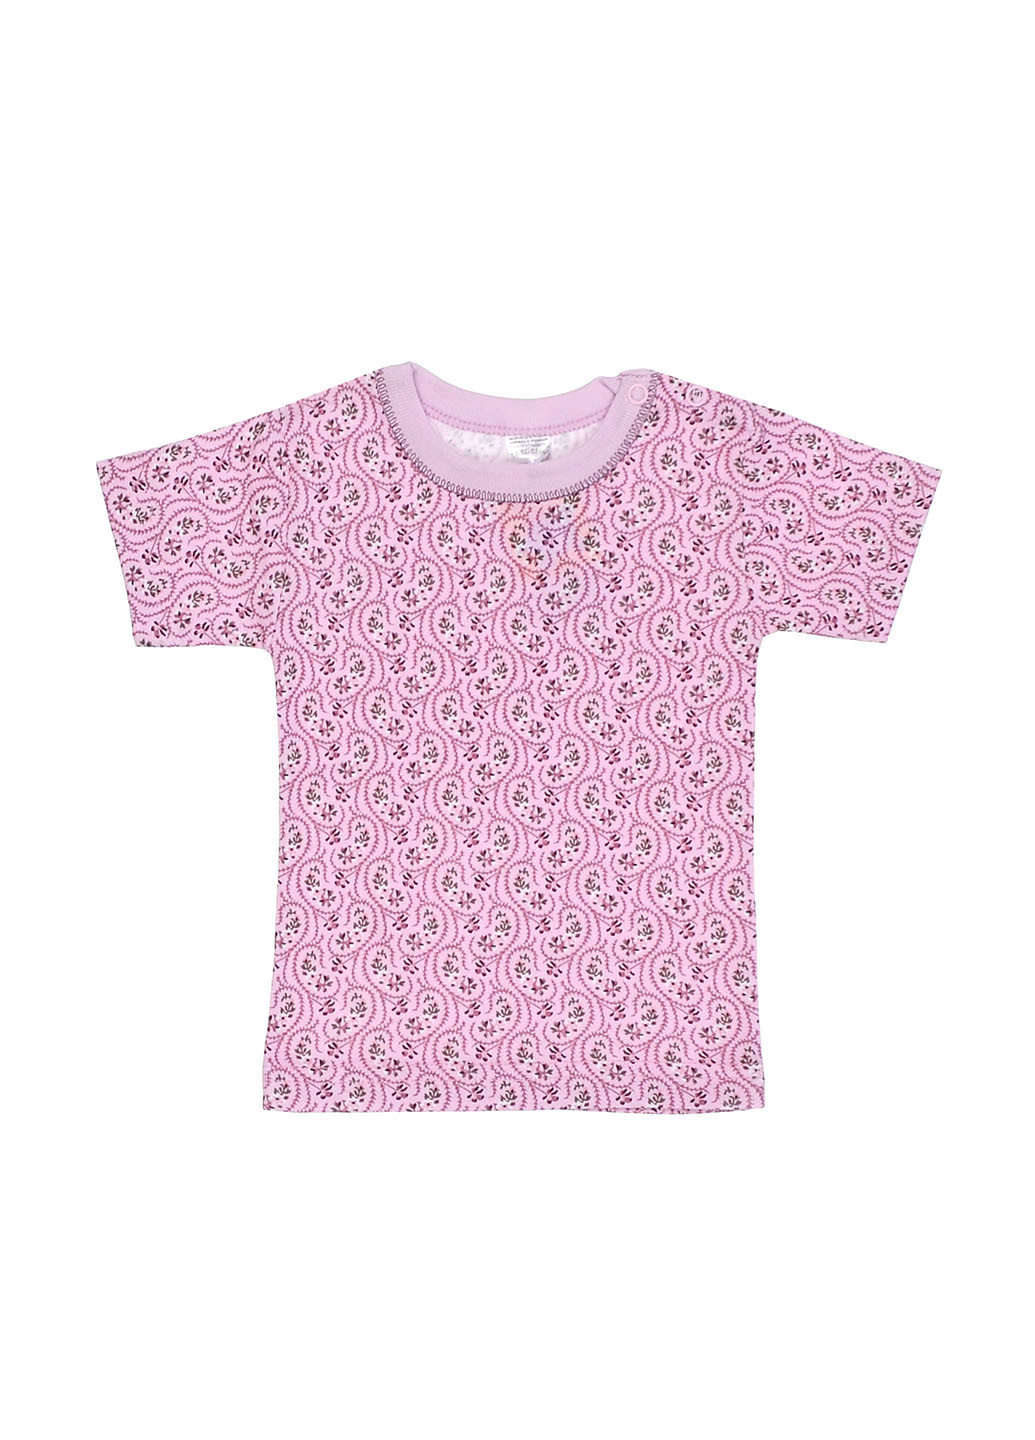 Розовая летняя футболка с коротким рукавом Татошка